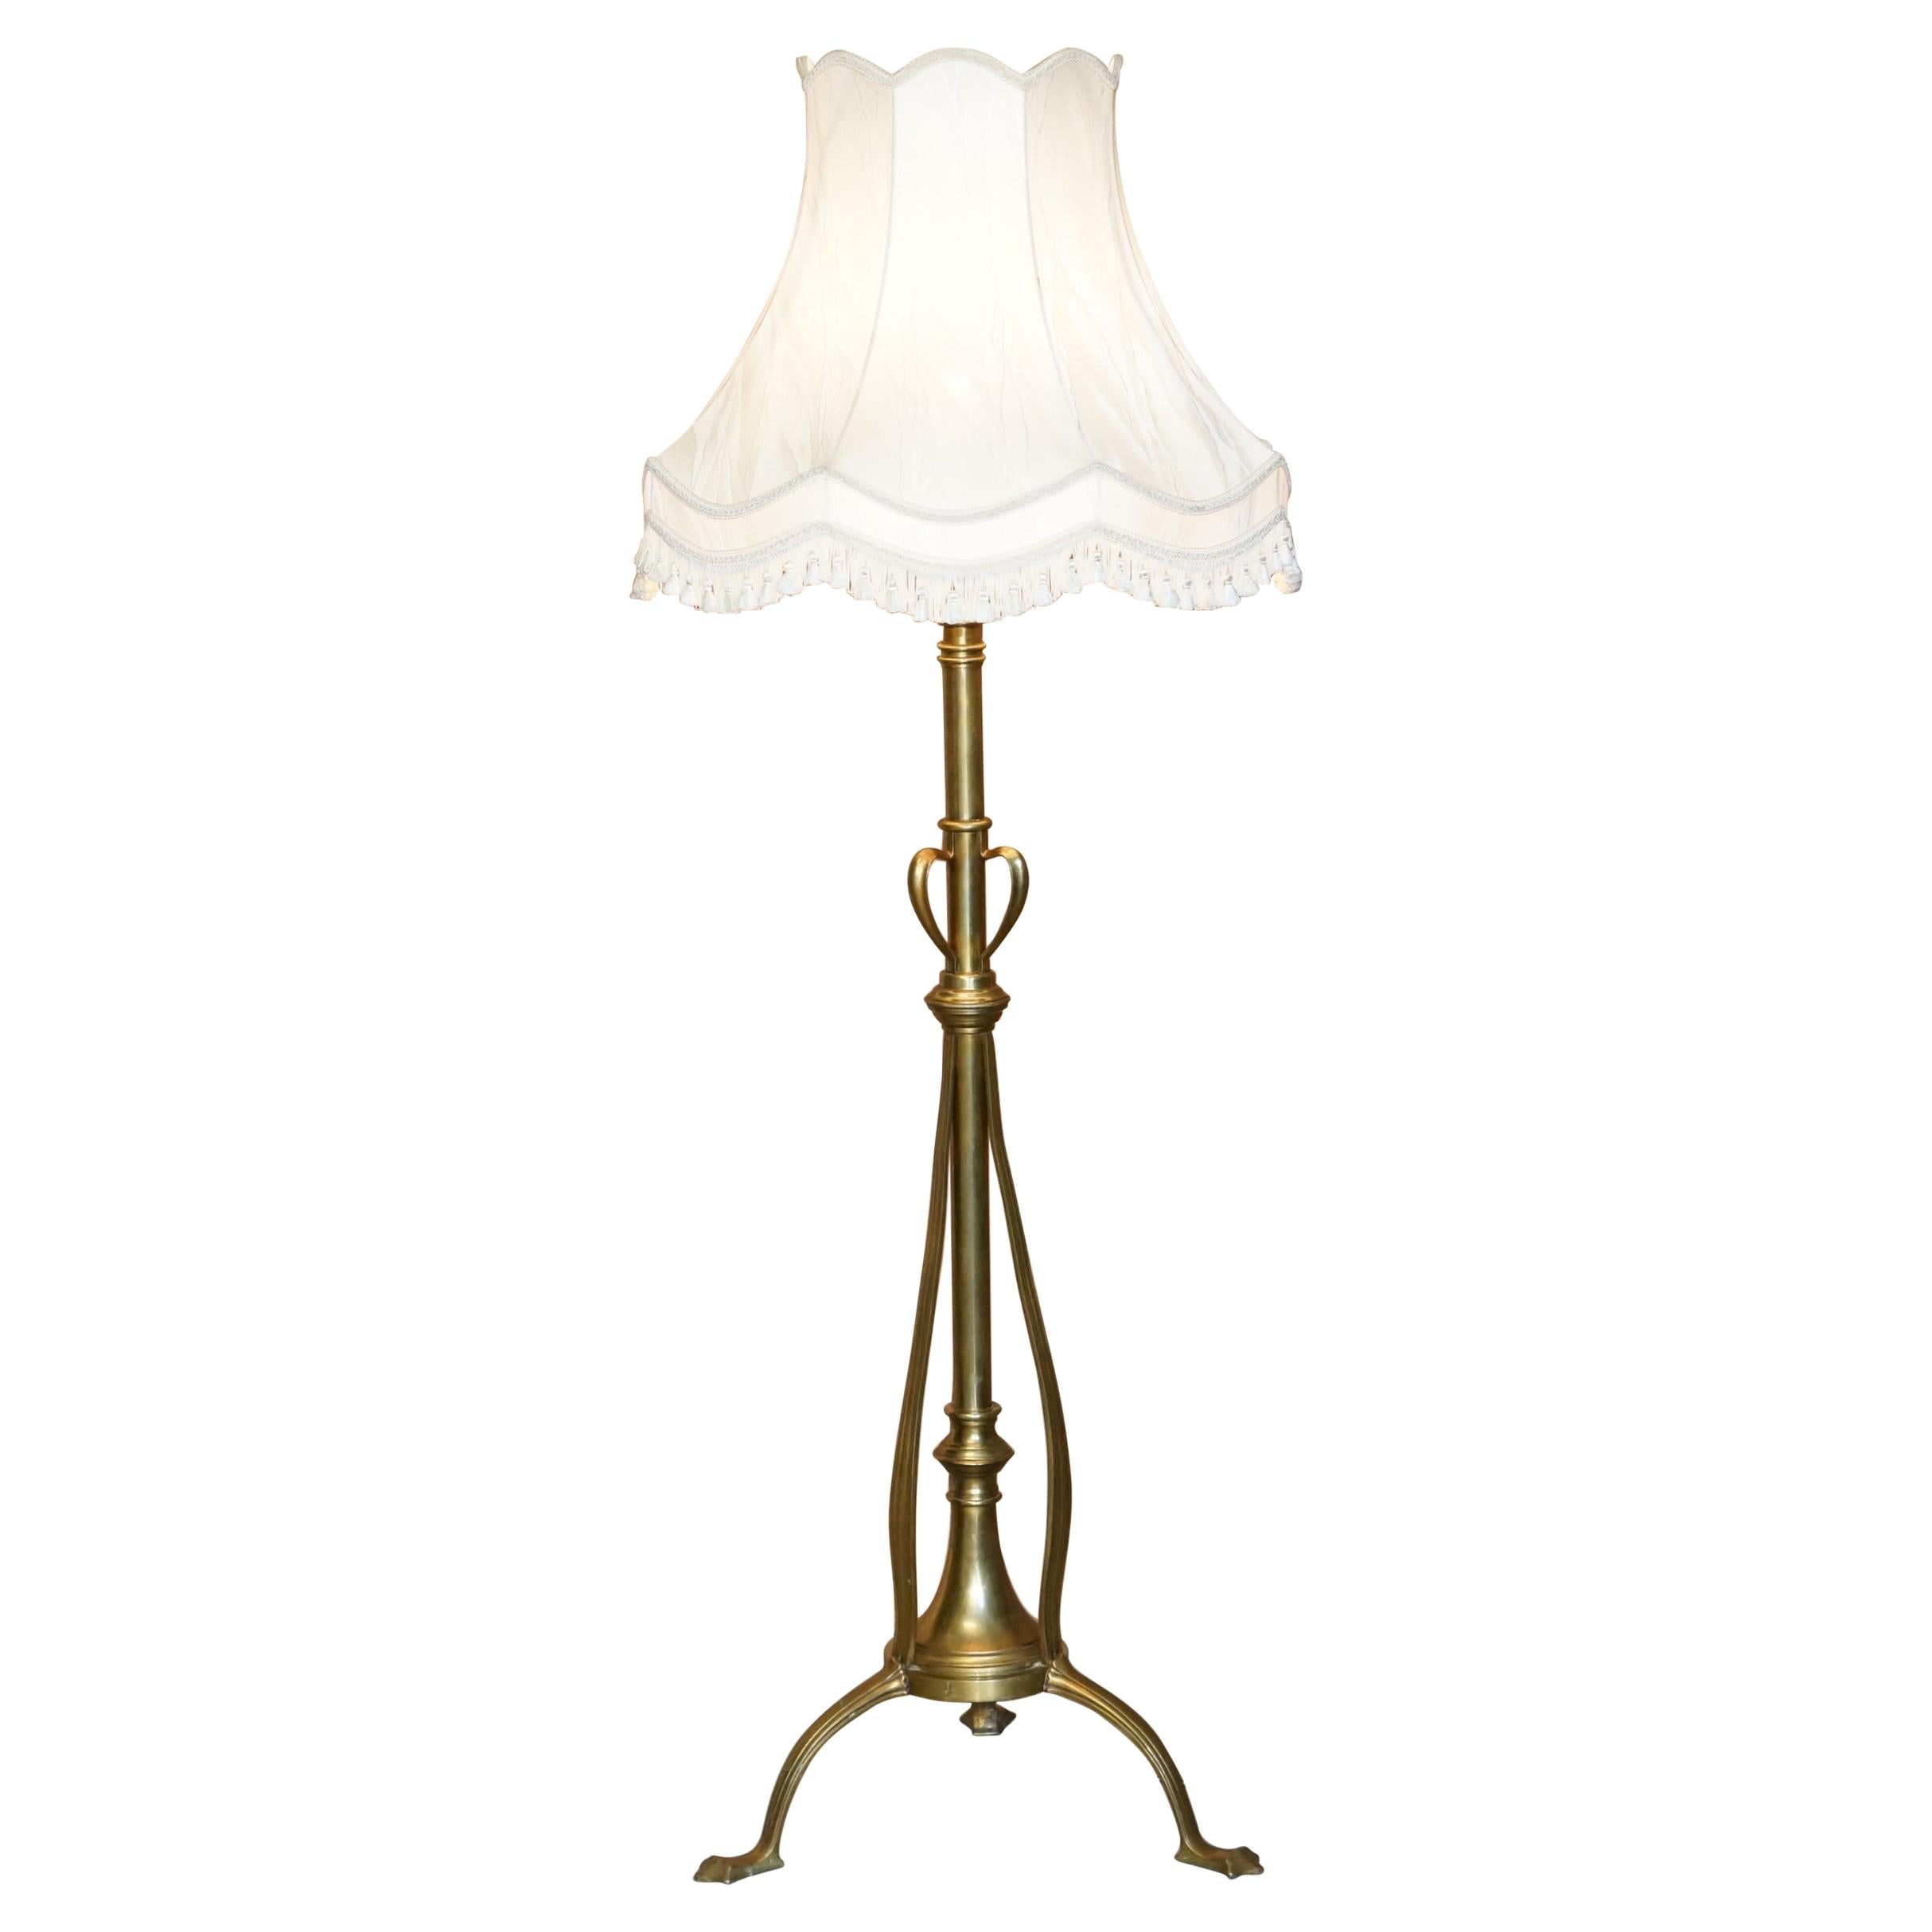 Antique Art Nouveau Floor Standing Lamp Height Adjustable Brass Sculptured Frame For Sale